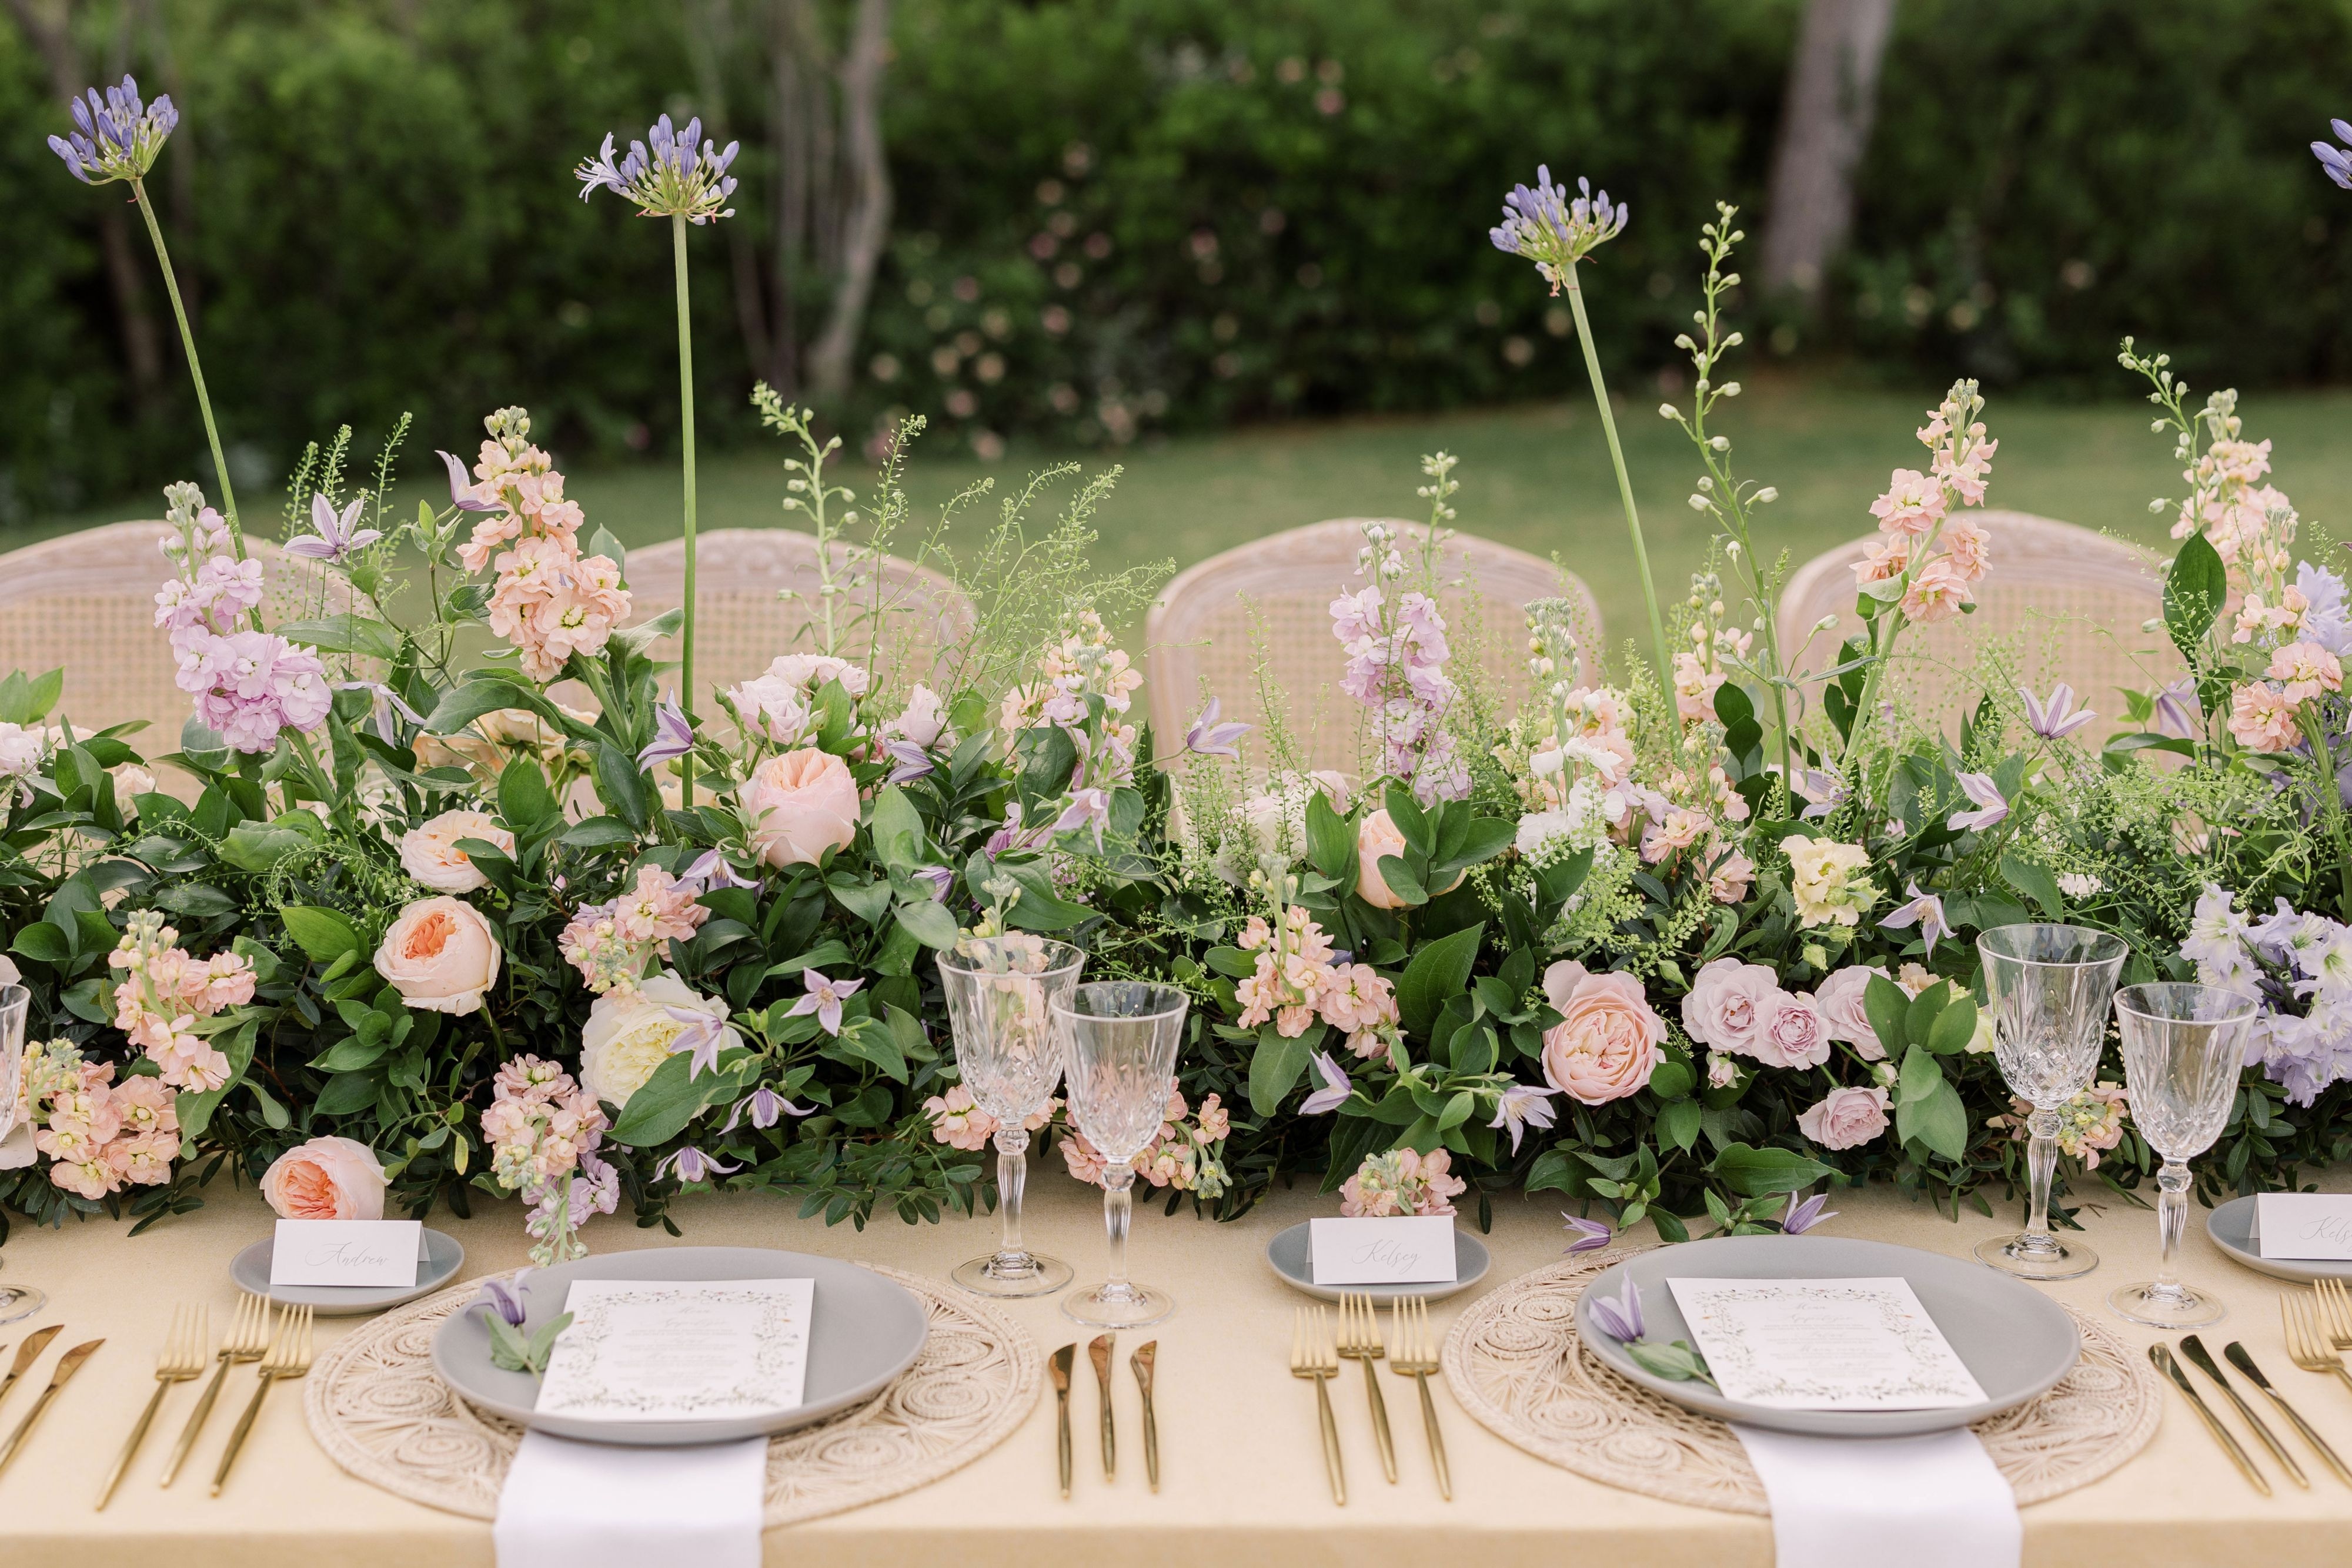 Wedding dinner table setting